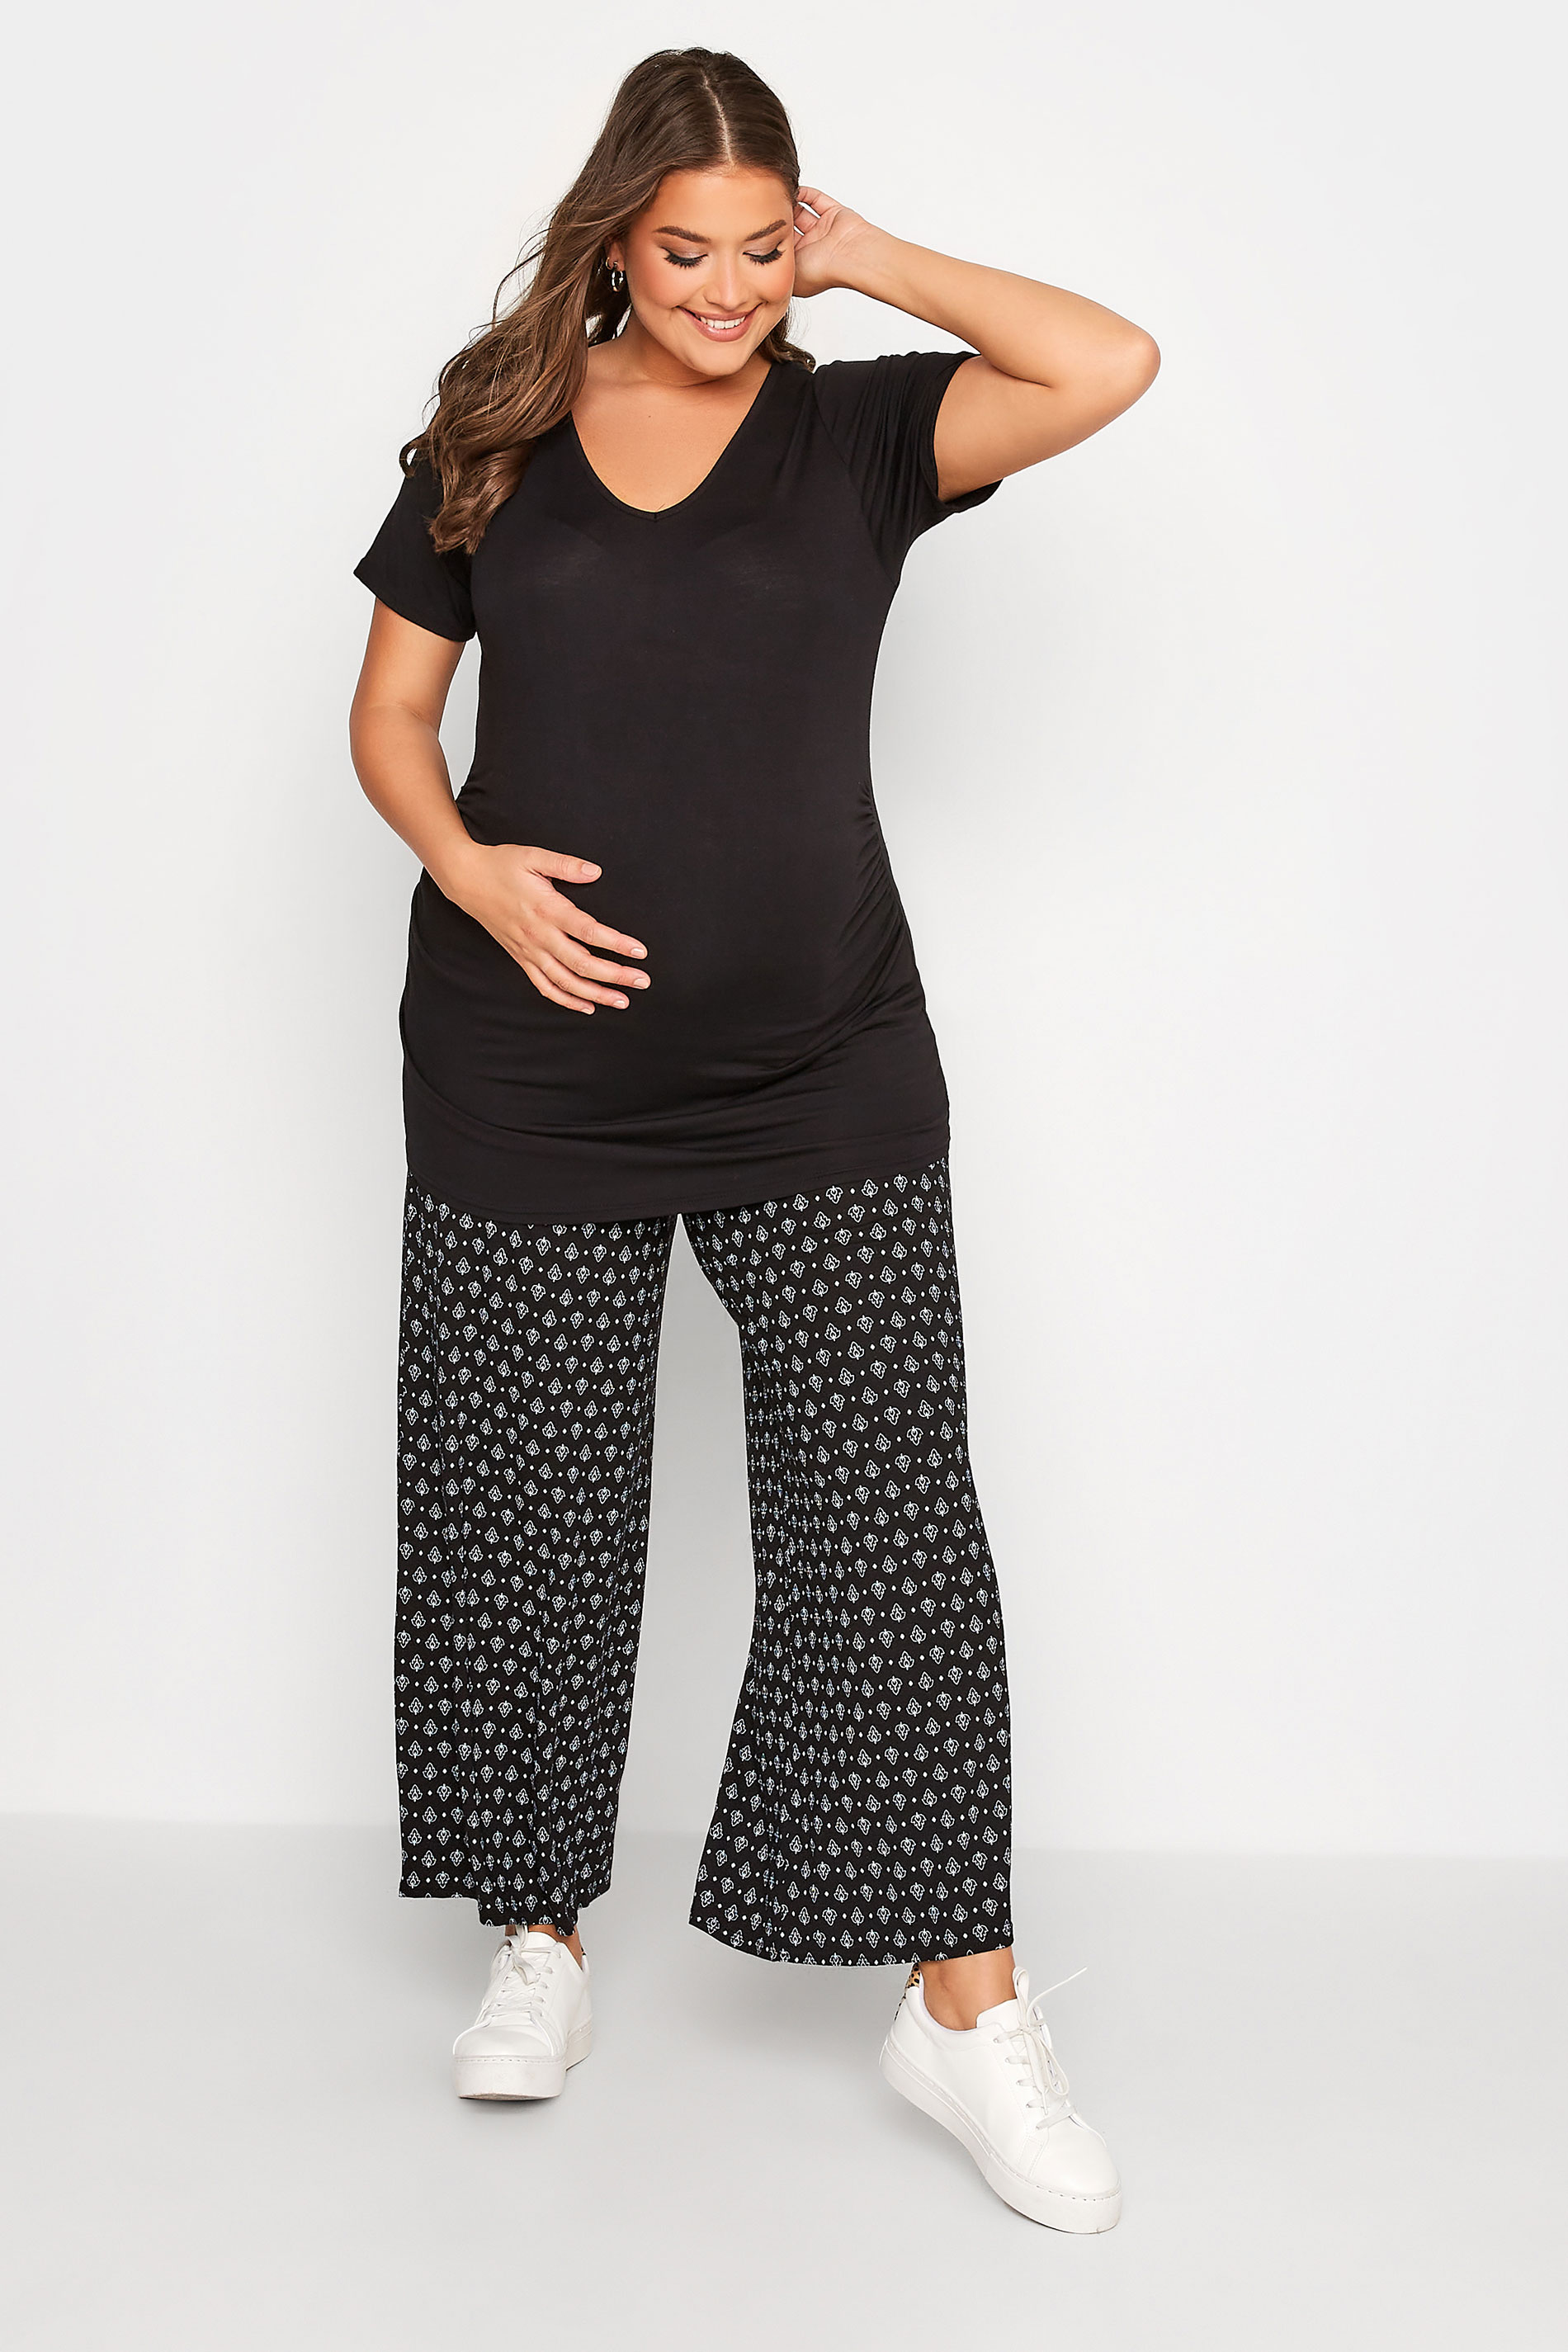 BUMP IT UP Maternity Plus-Size Curve Black Geometric Print Wide Leg Trousers | Yours Clothing  2